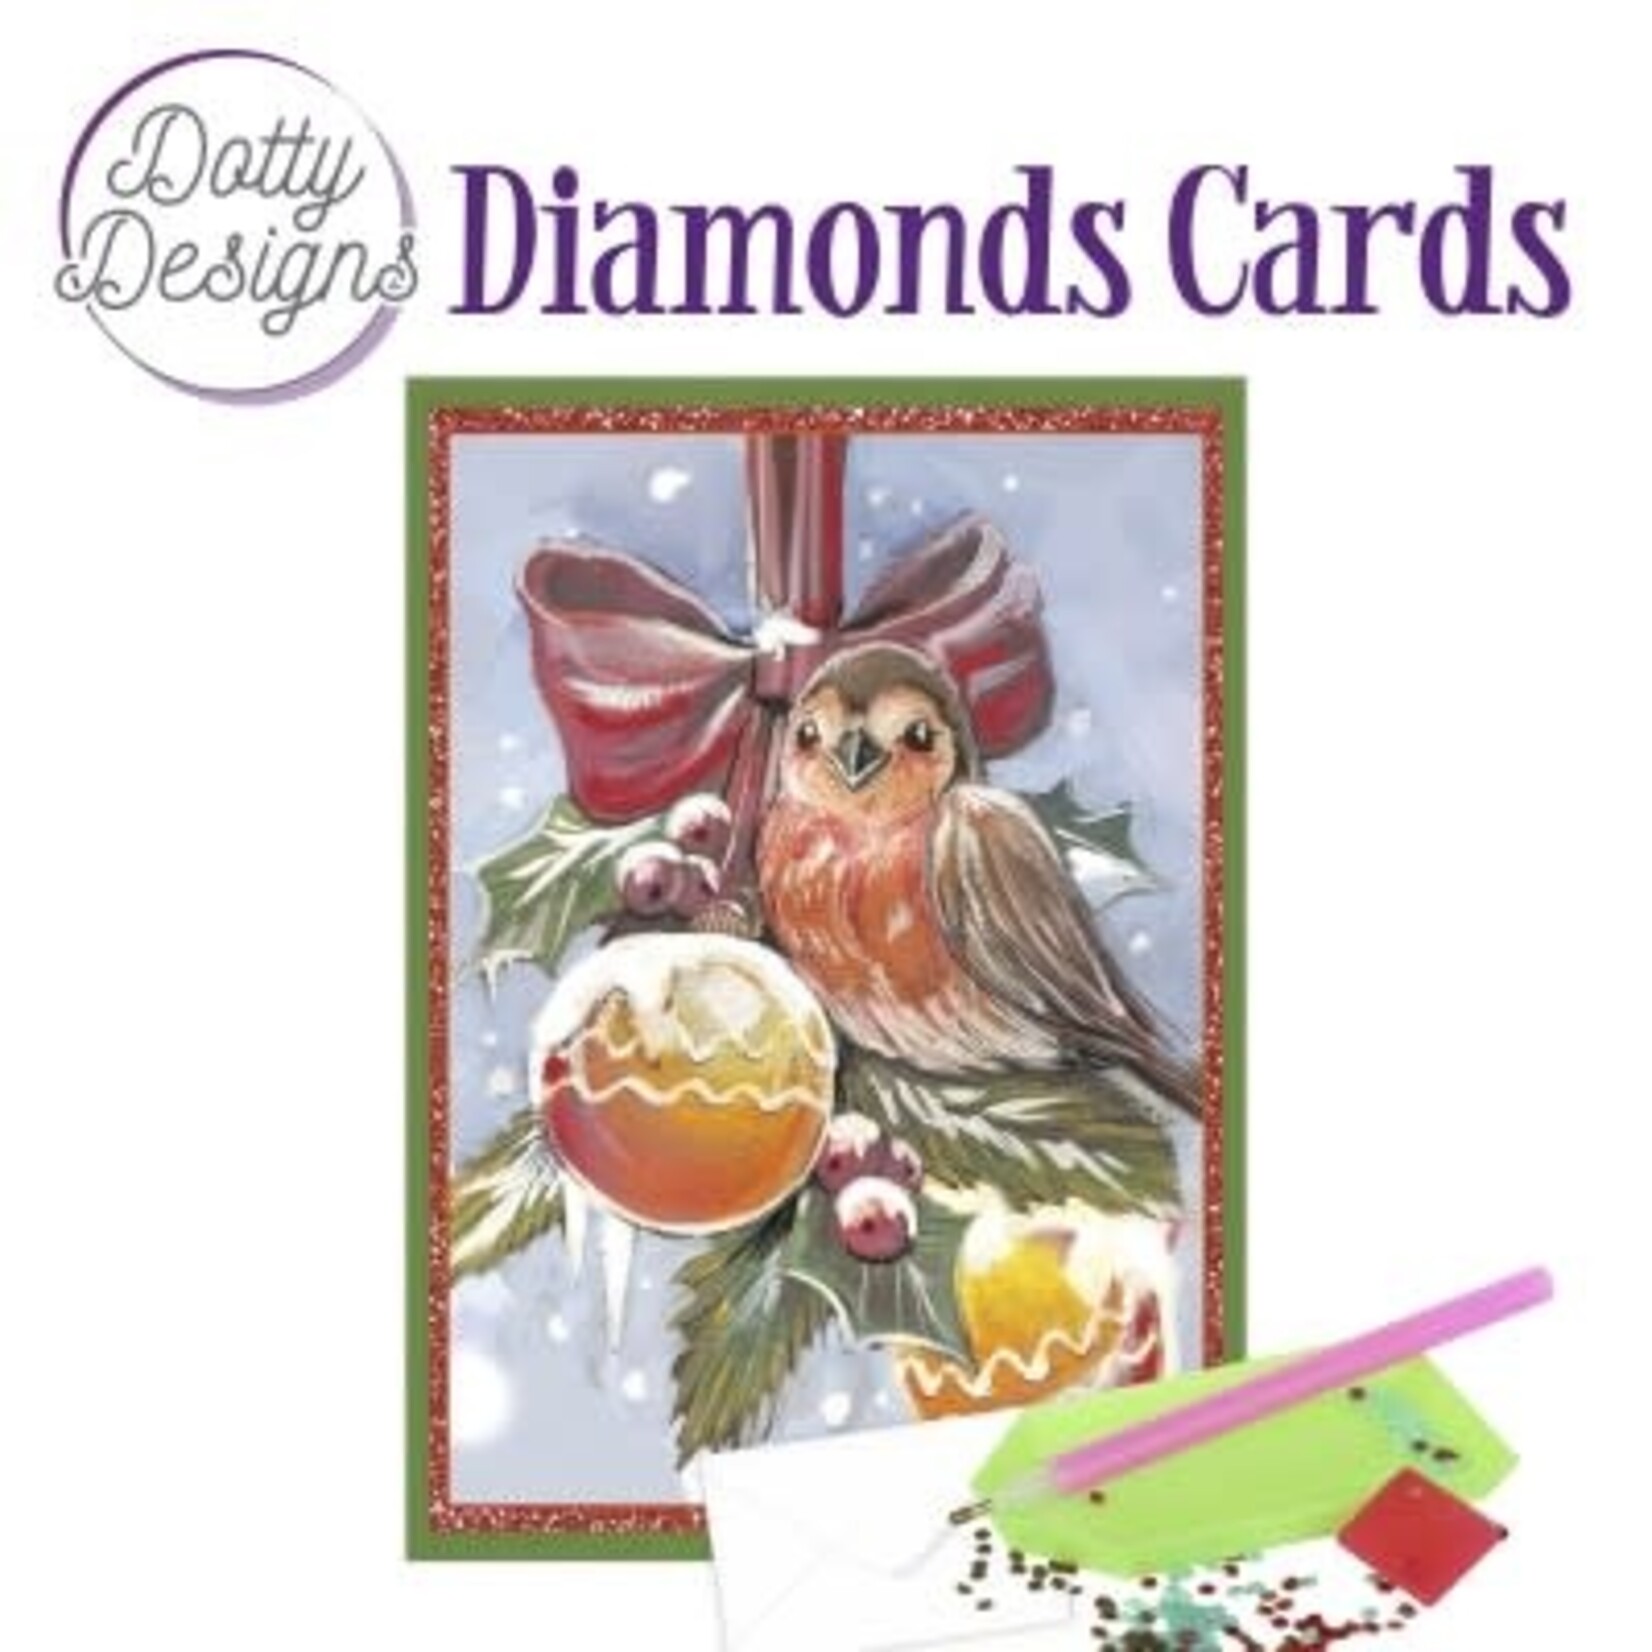 Dotty Designs Dotty Designs Diamond Cards - Bird with Christmas ornaments